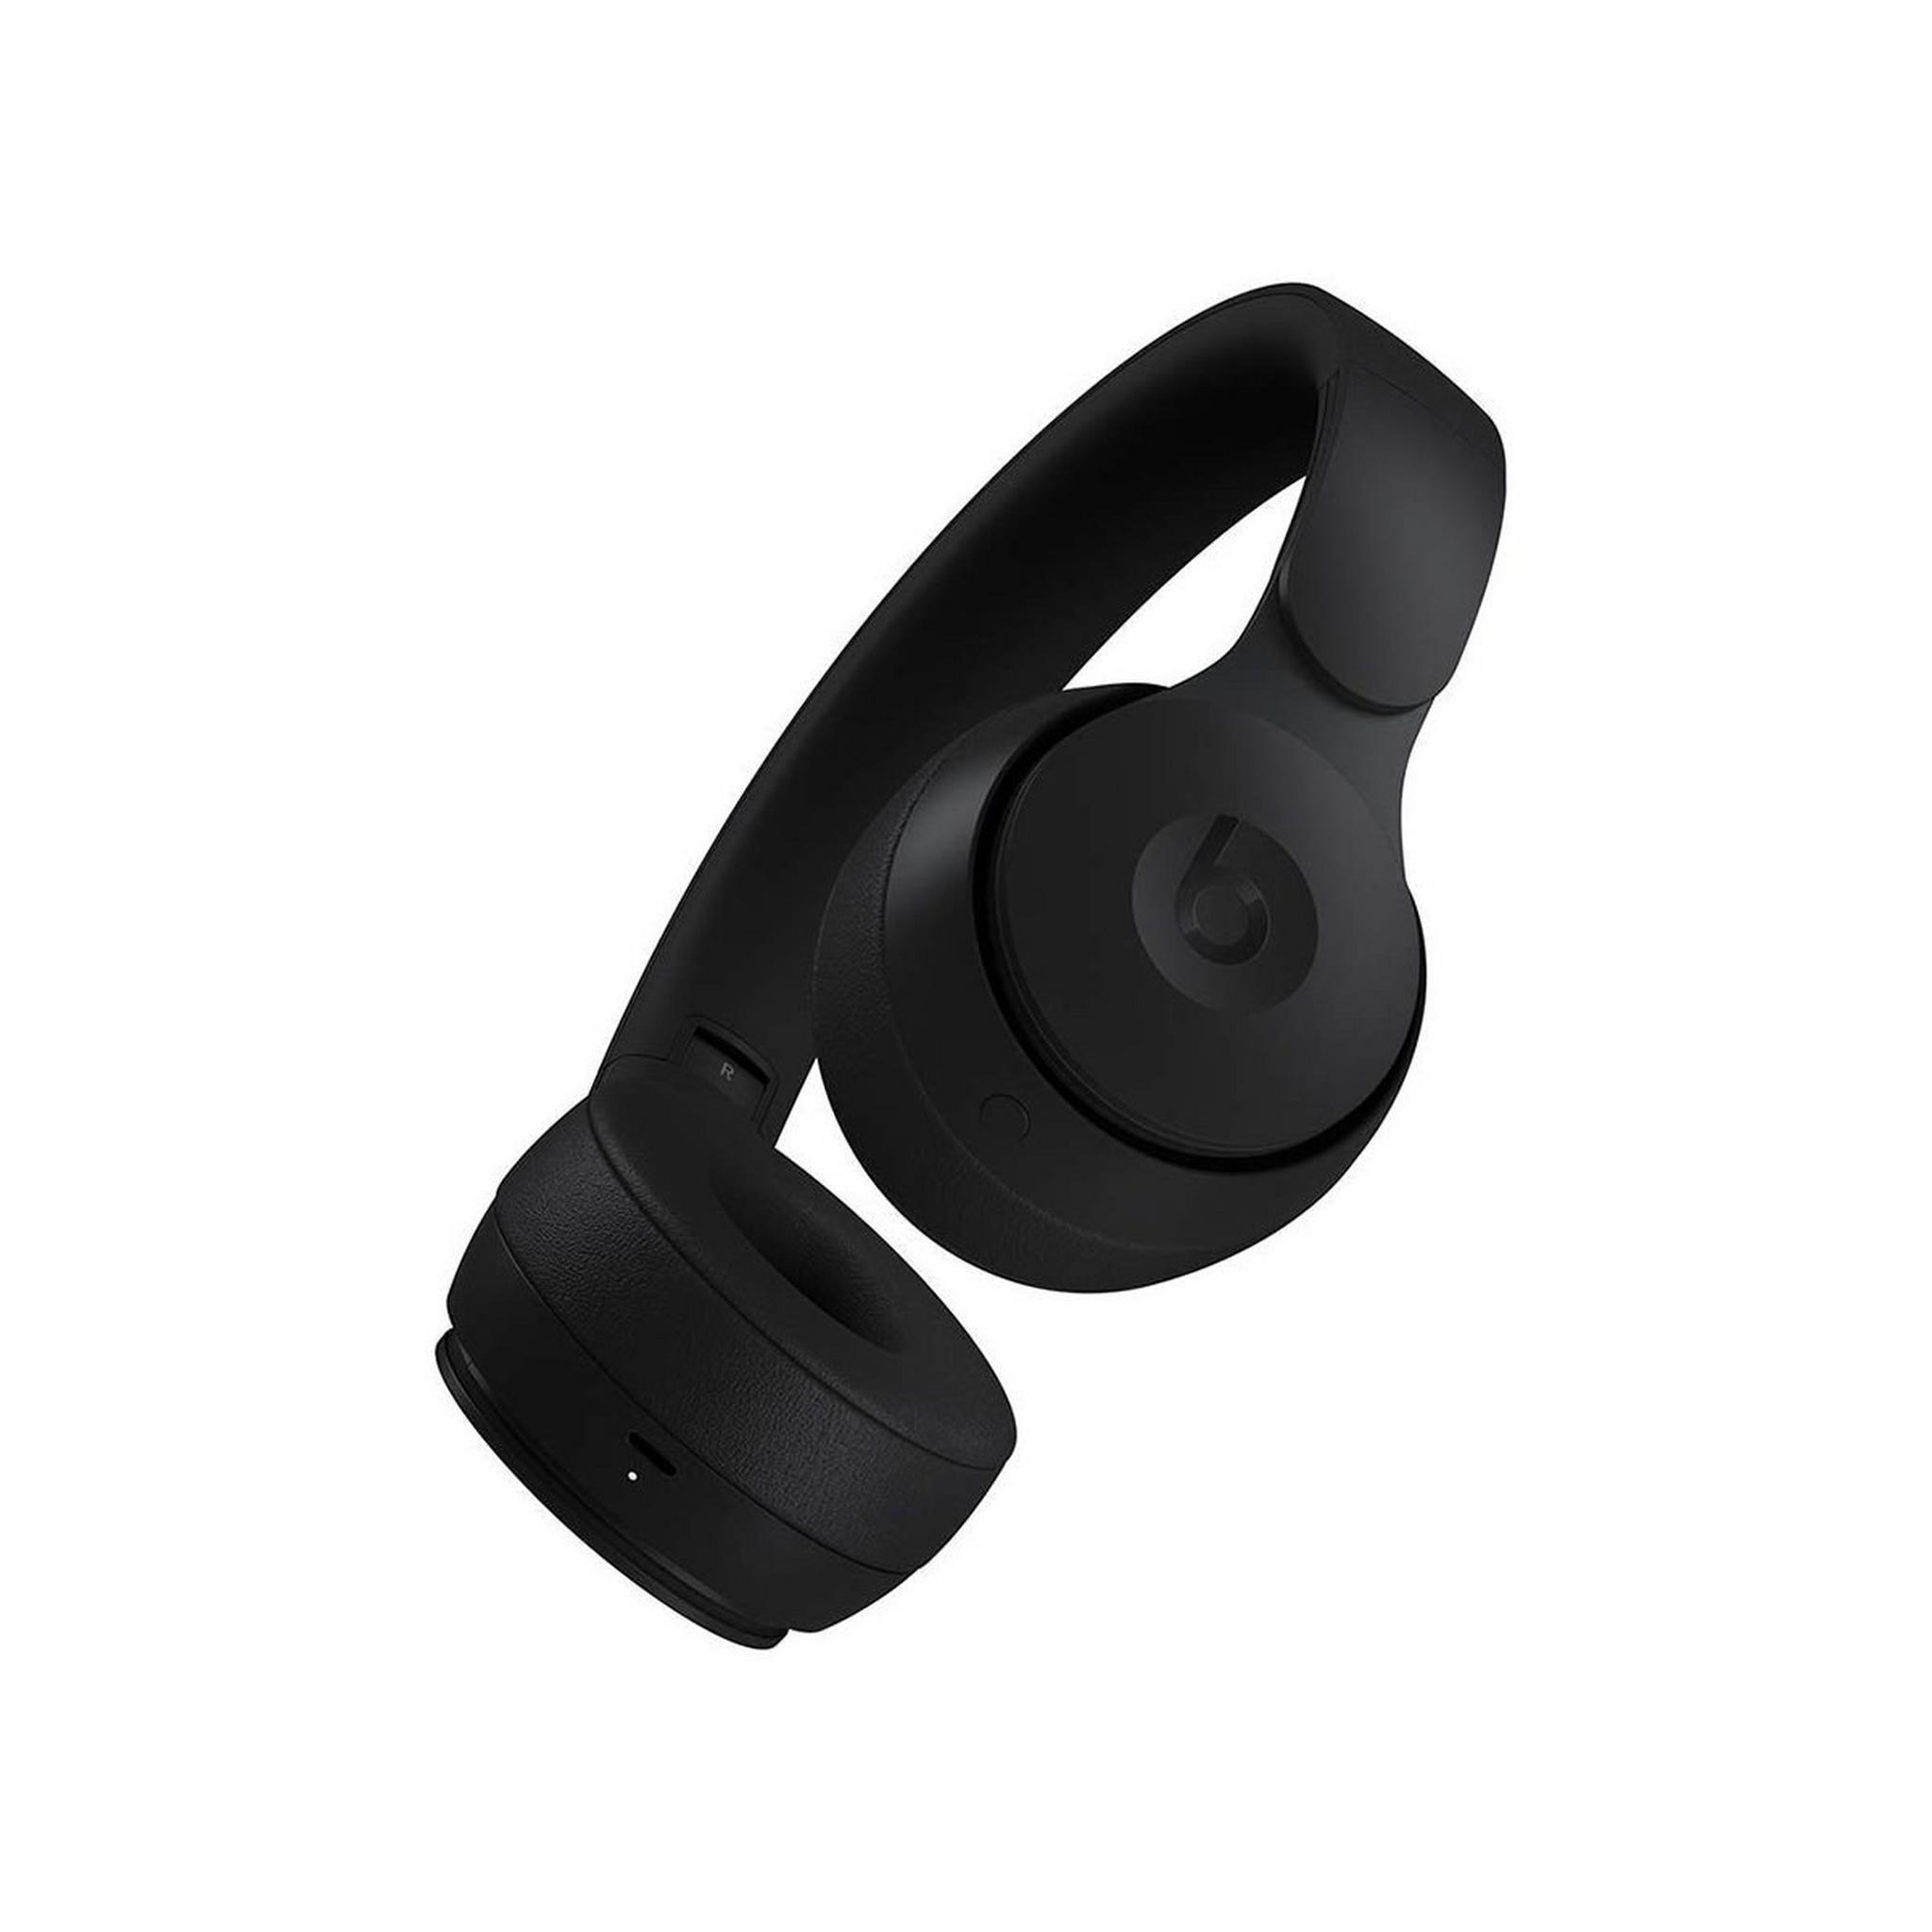 Beats by Dr. Dre Solo Pro Wireless Over-ear Headphone - Black